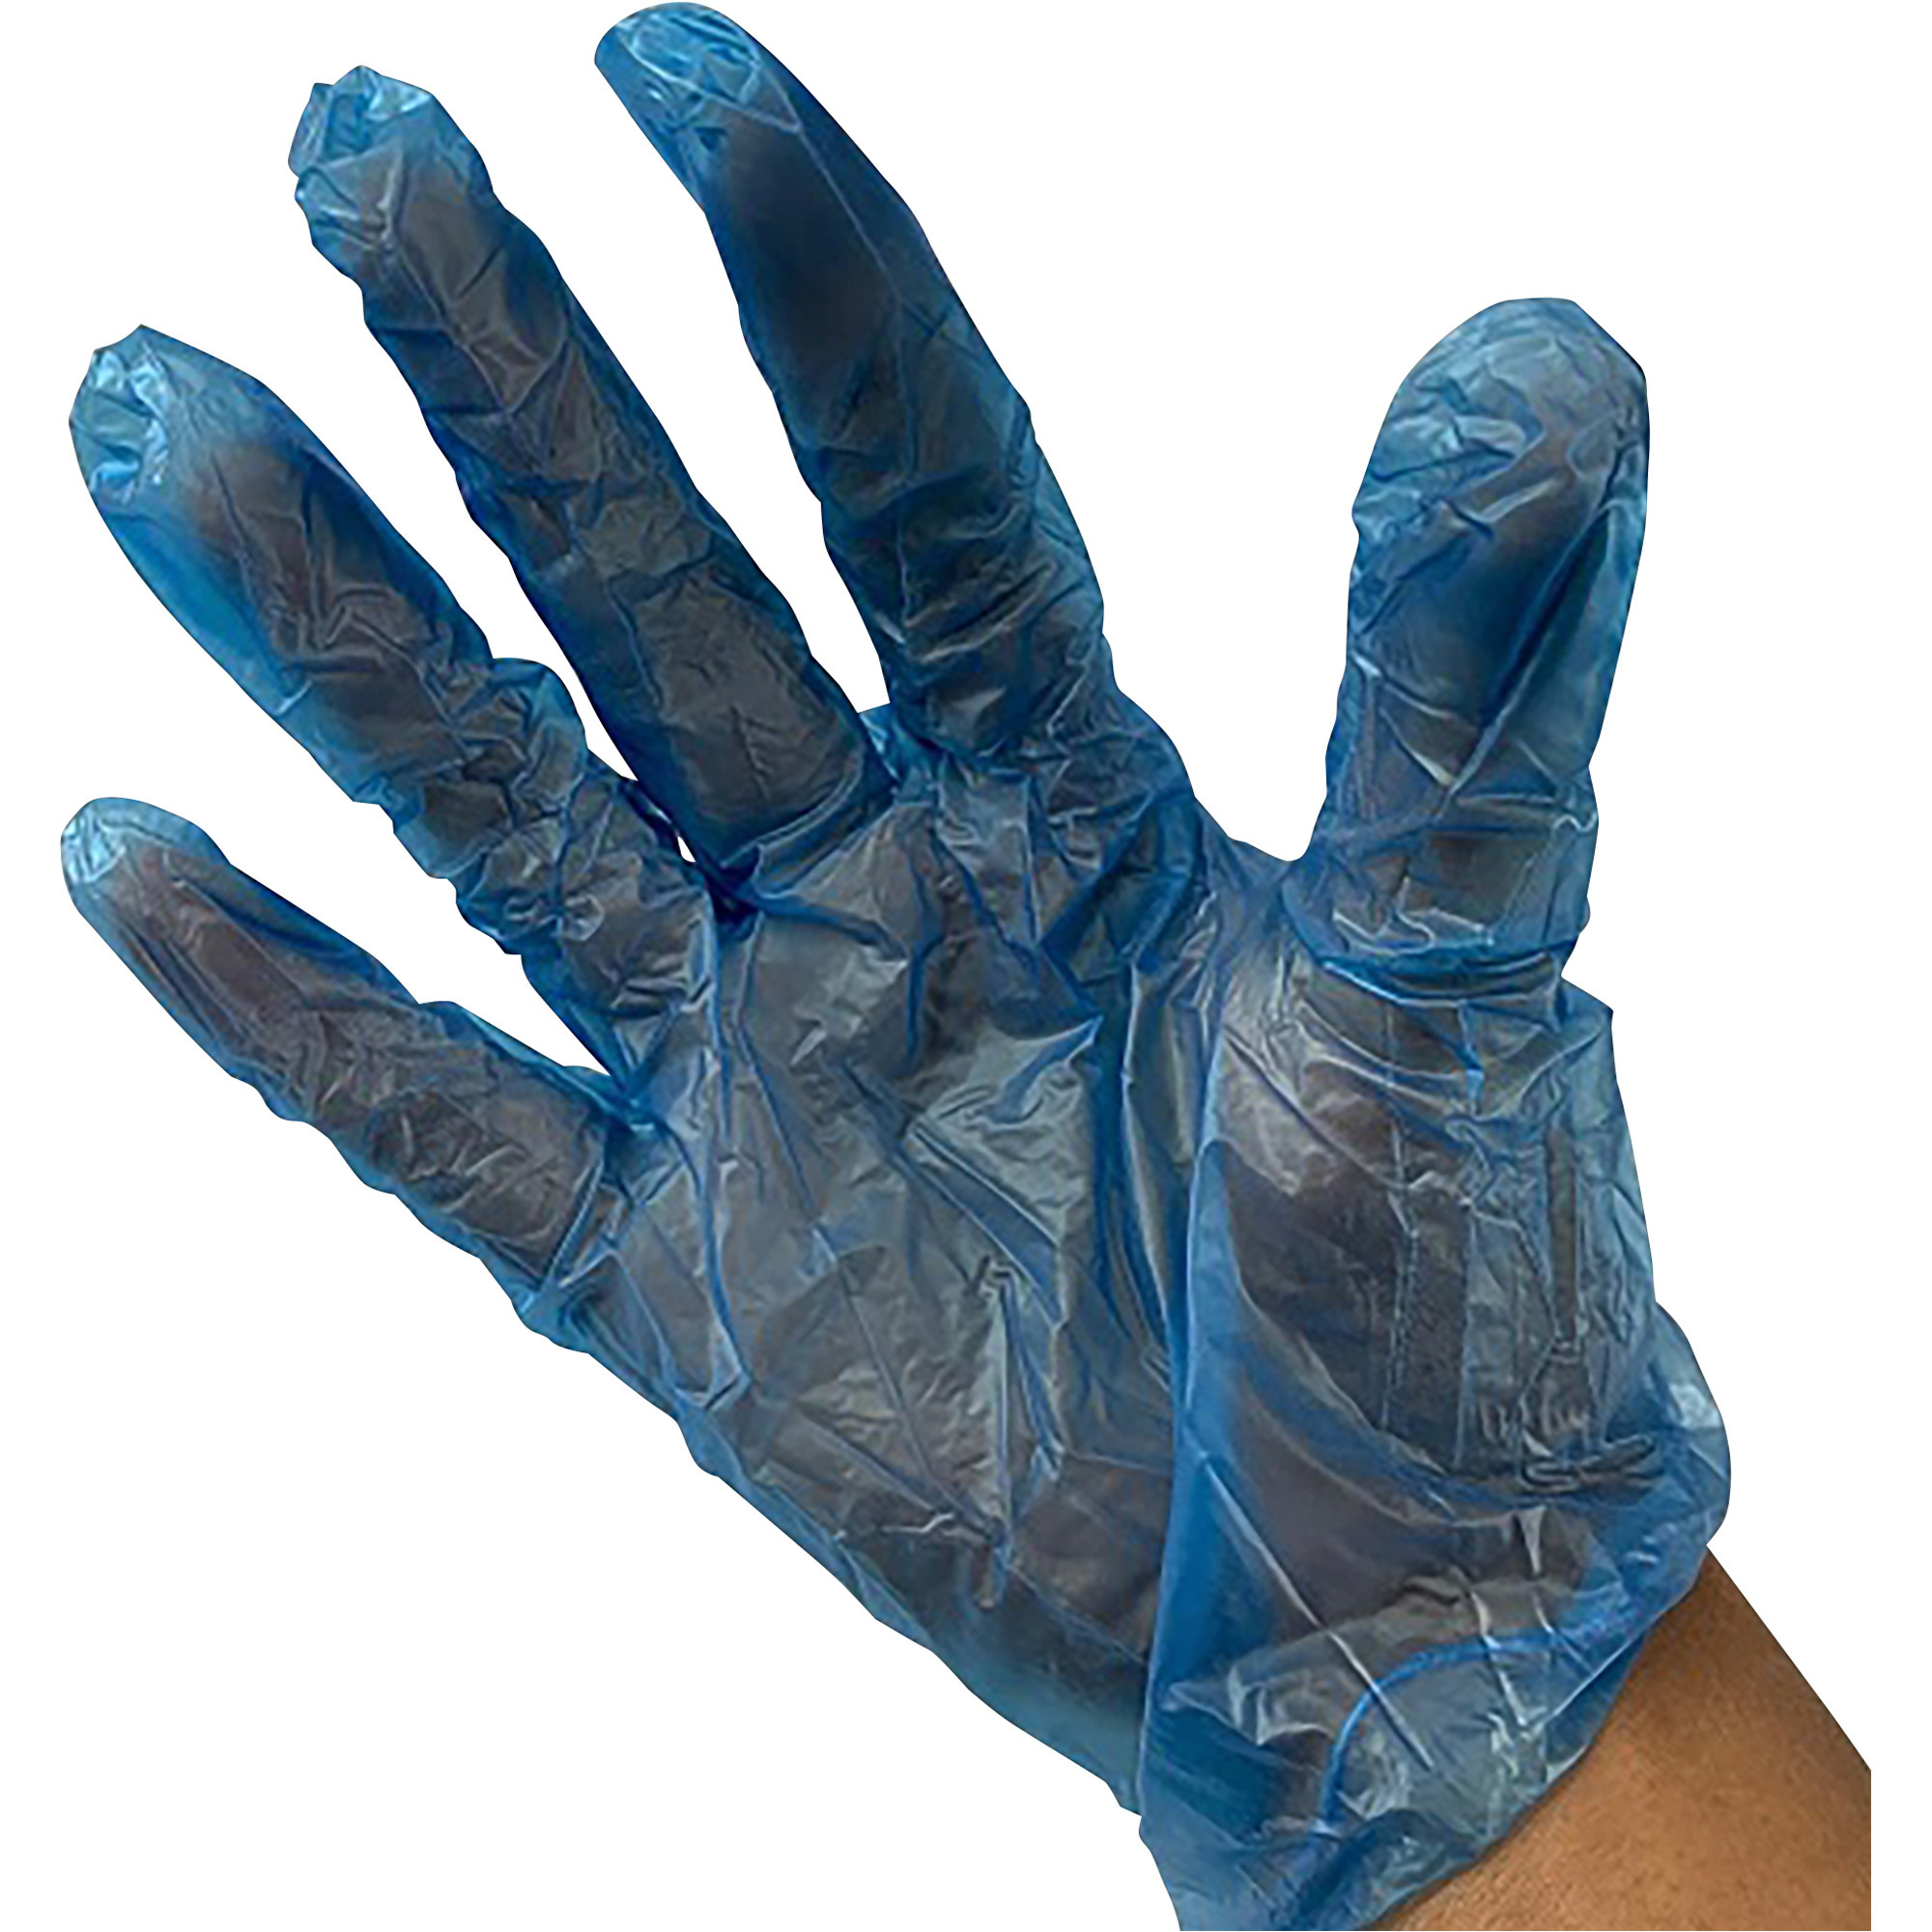 Hawk Disposable Vinyl Safety Gloves â 100-Pack, Blue, Medium, Model GL-42-10WB-M